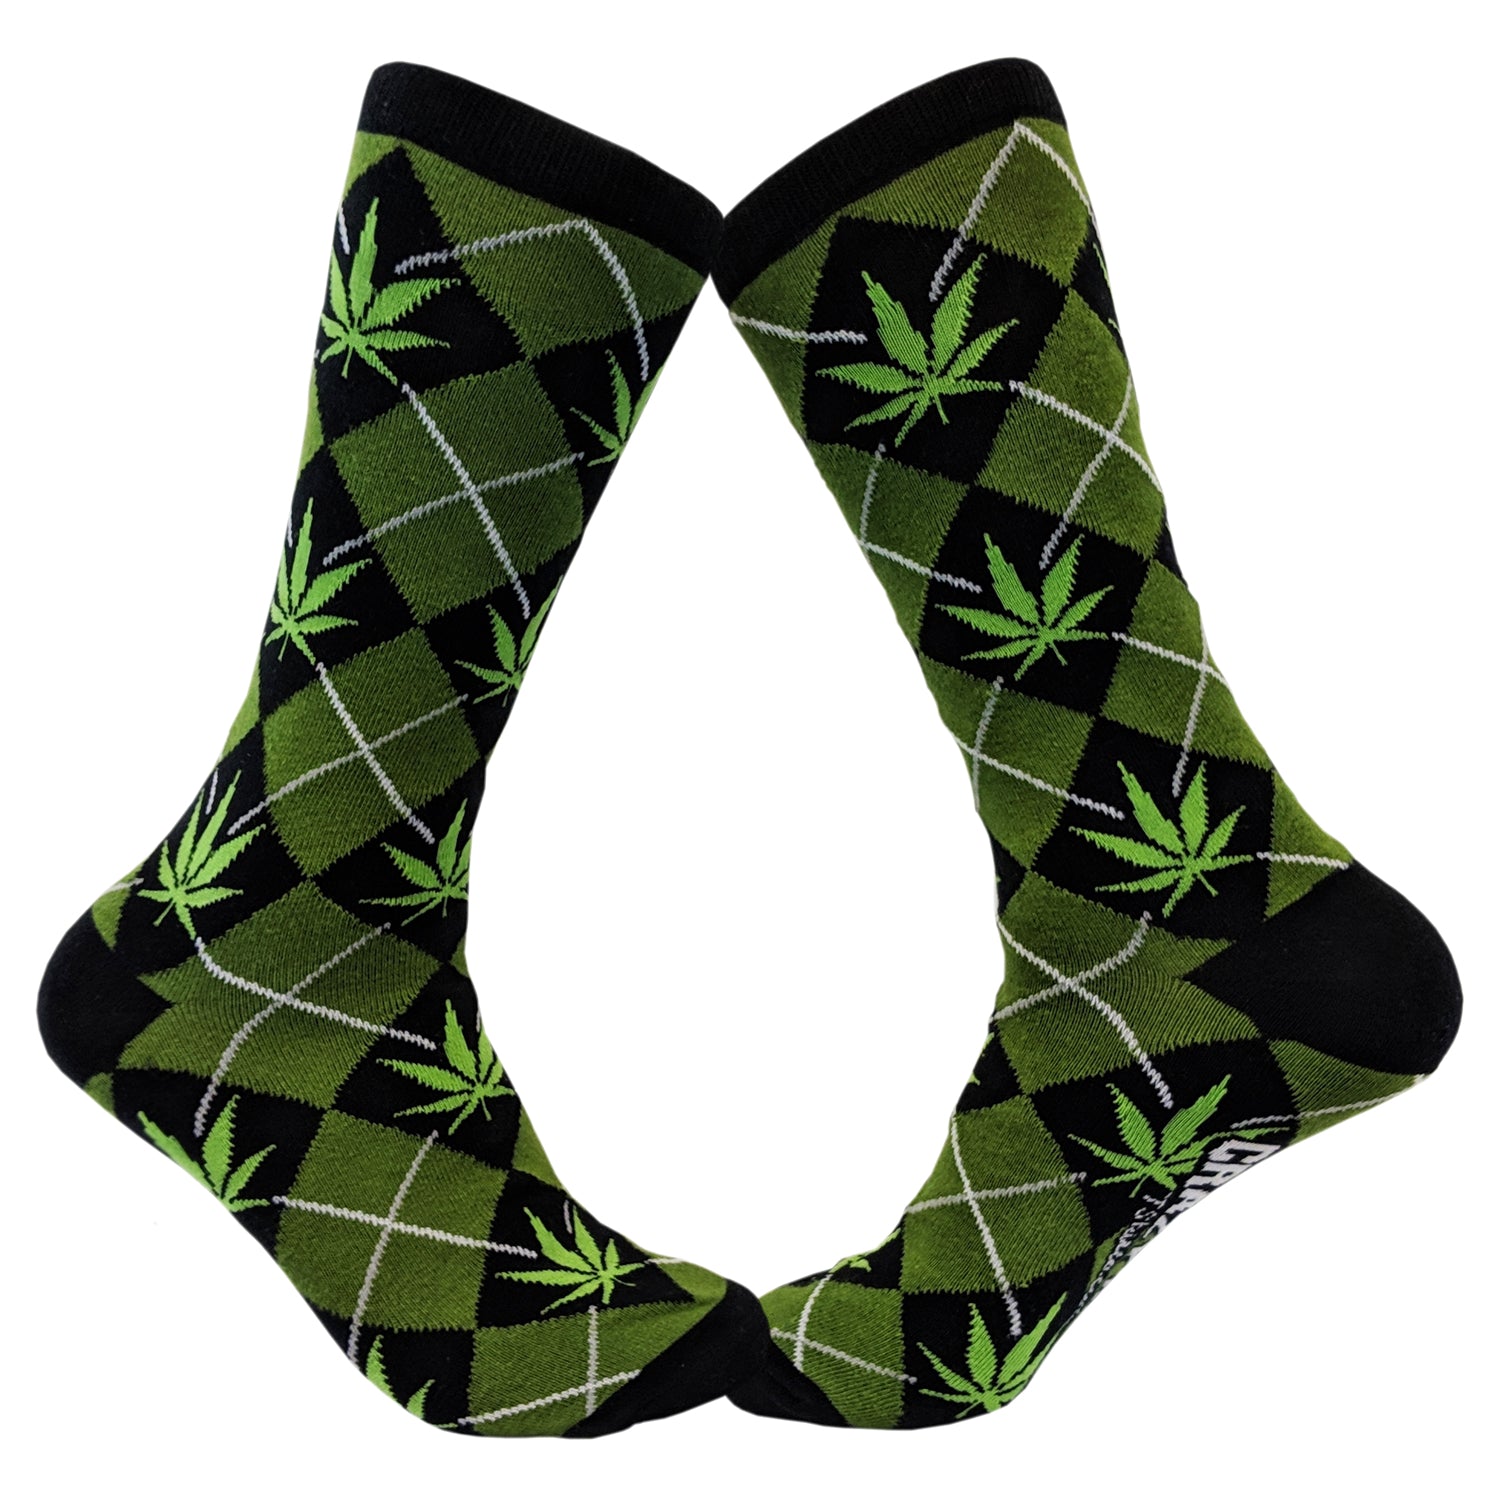 Funny Green Argyle Marijuana Sock Nerdy 420 Tee